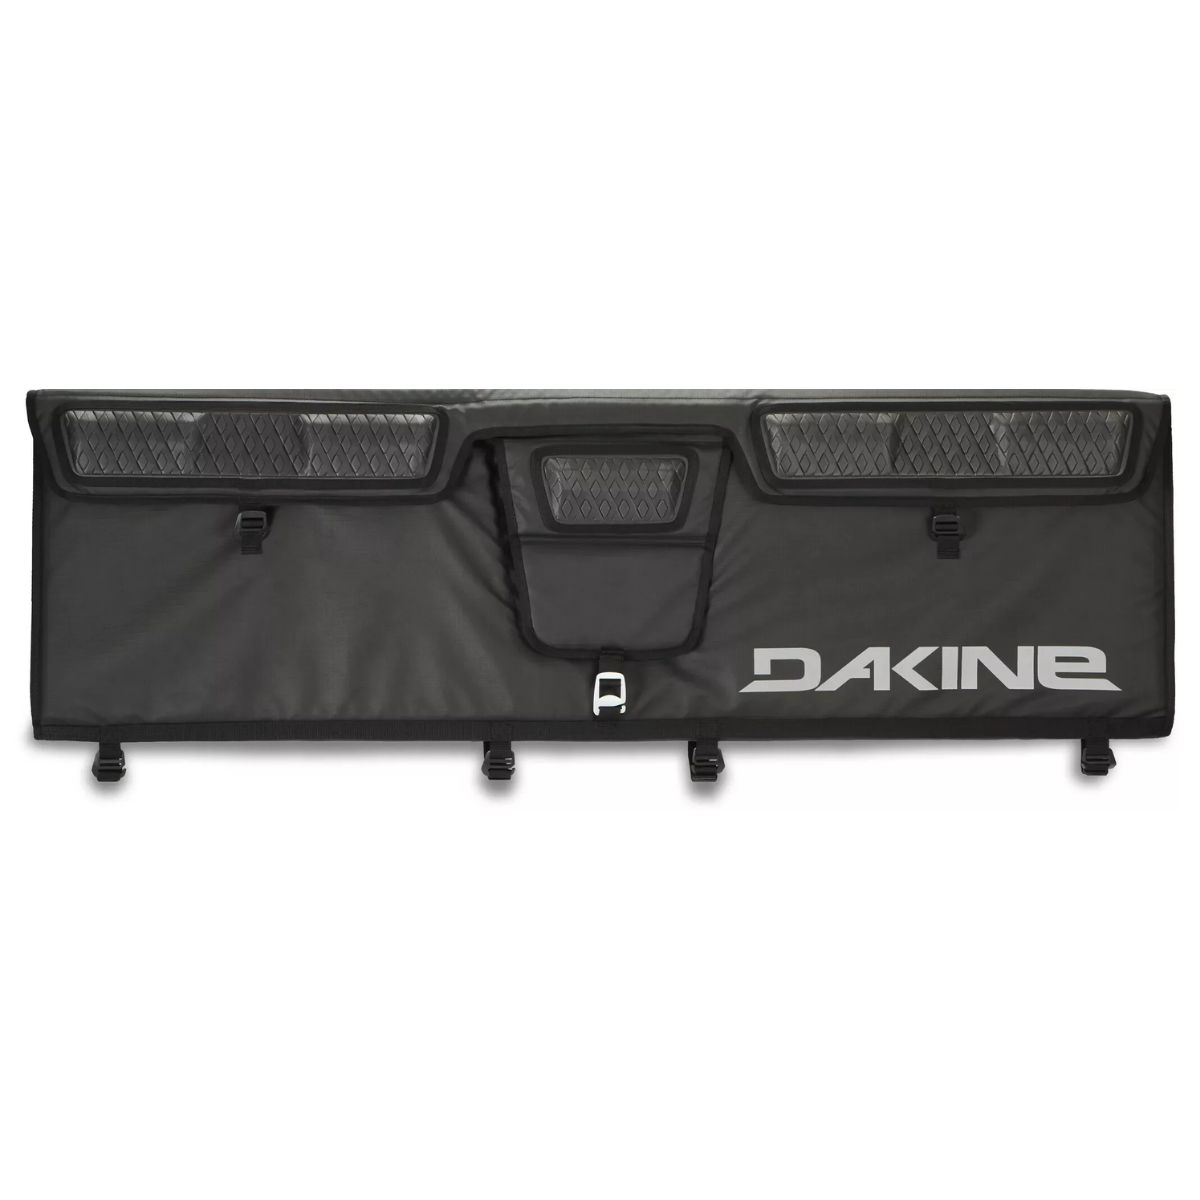 Protector for Truck Box Dakine Universal Pickup Pad Large Black